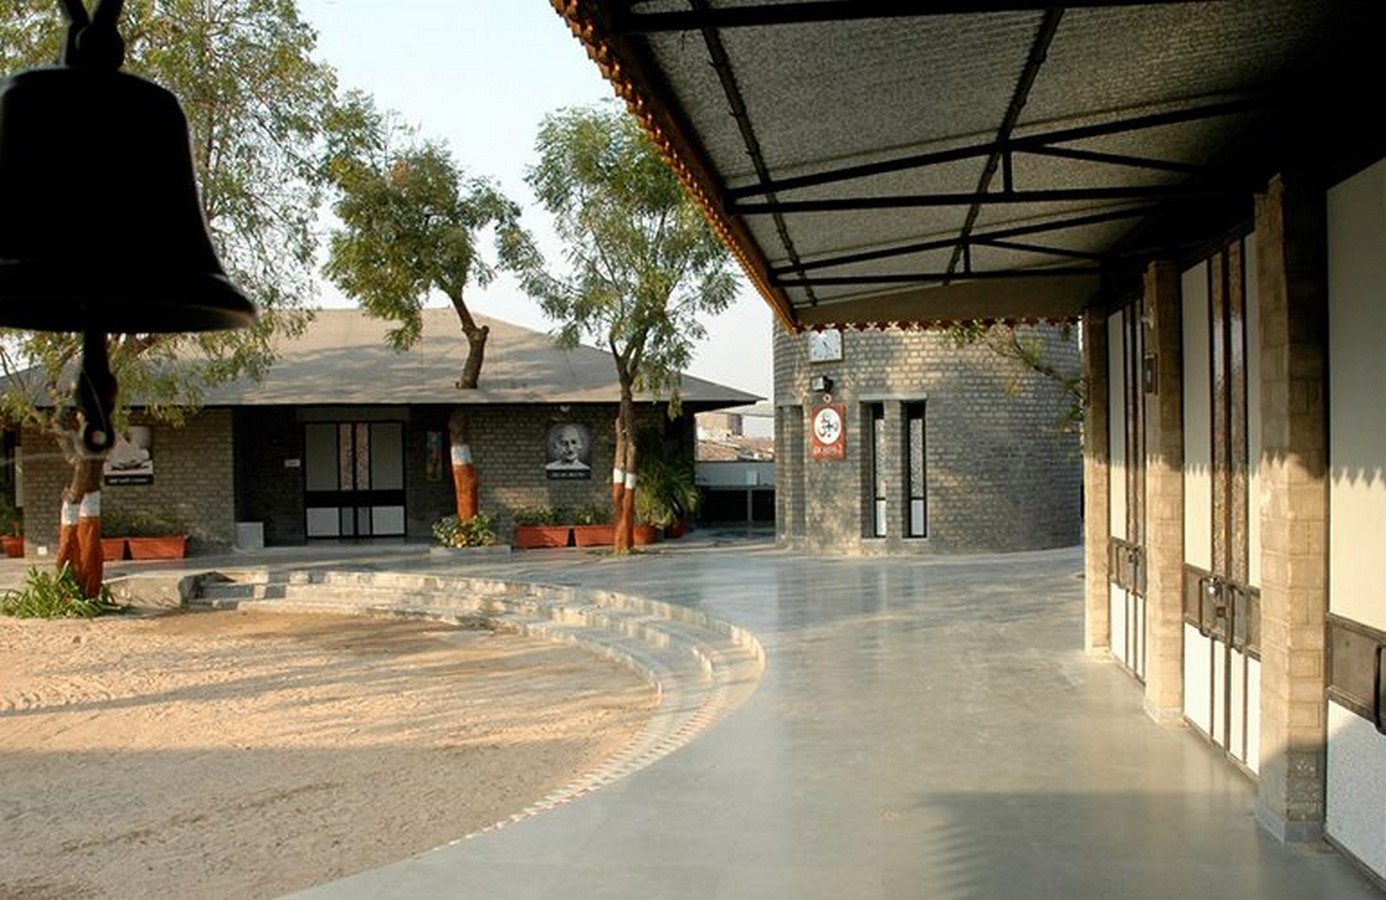 Manav Sadhna Activity Centre, Ahmedabad - Sheet1